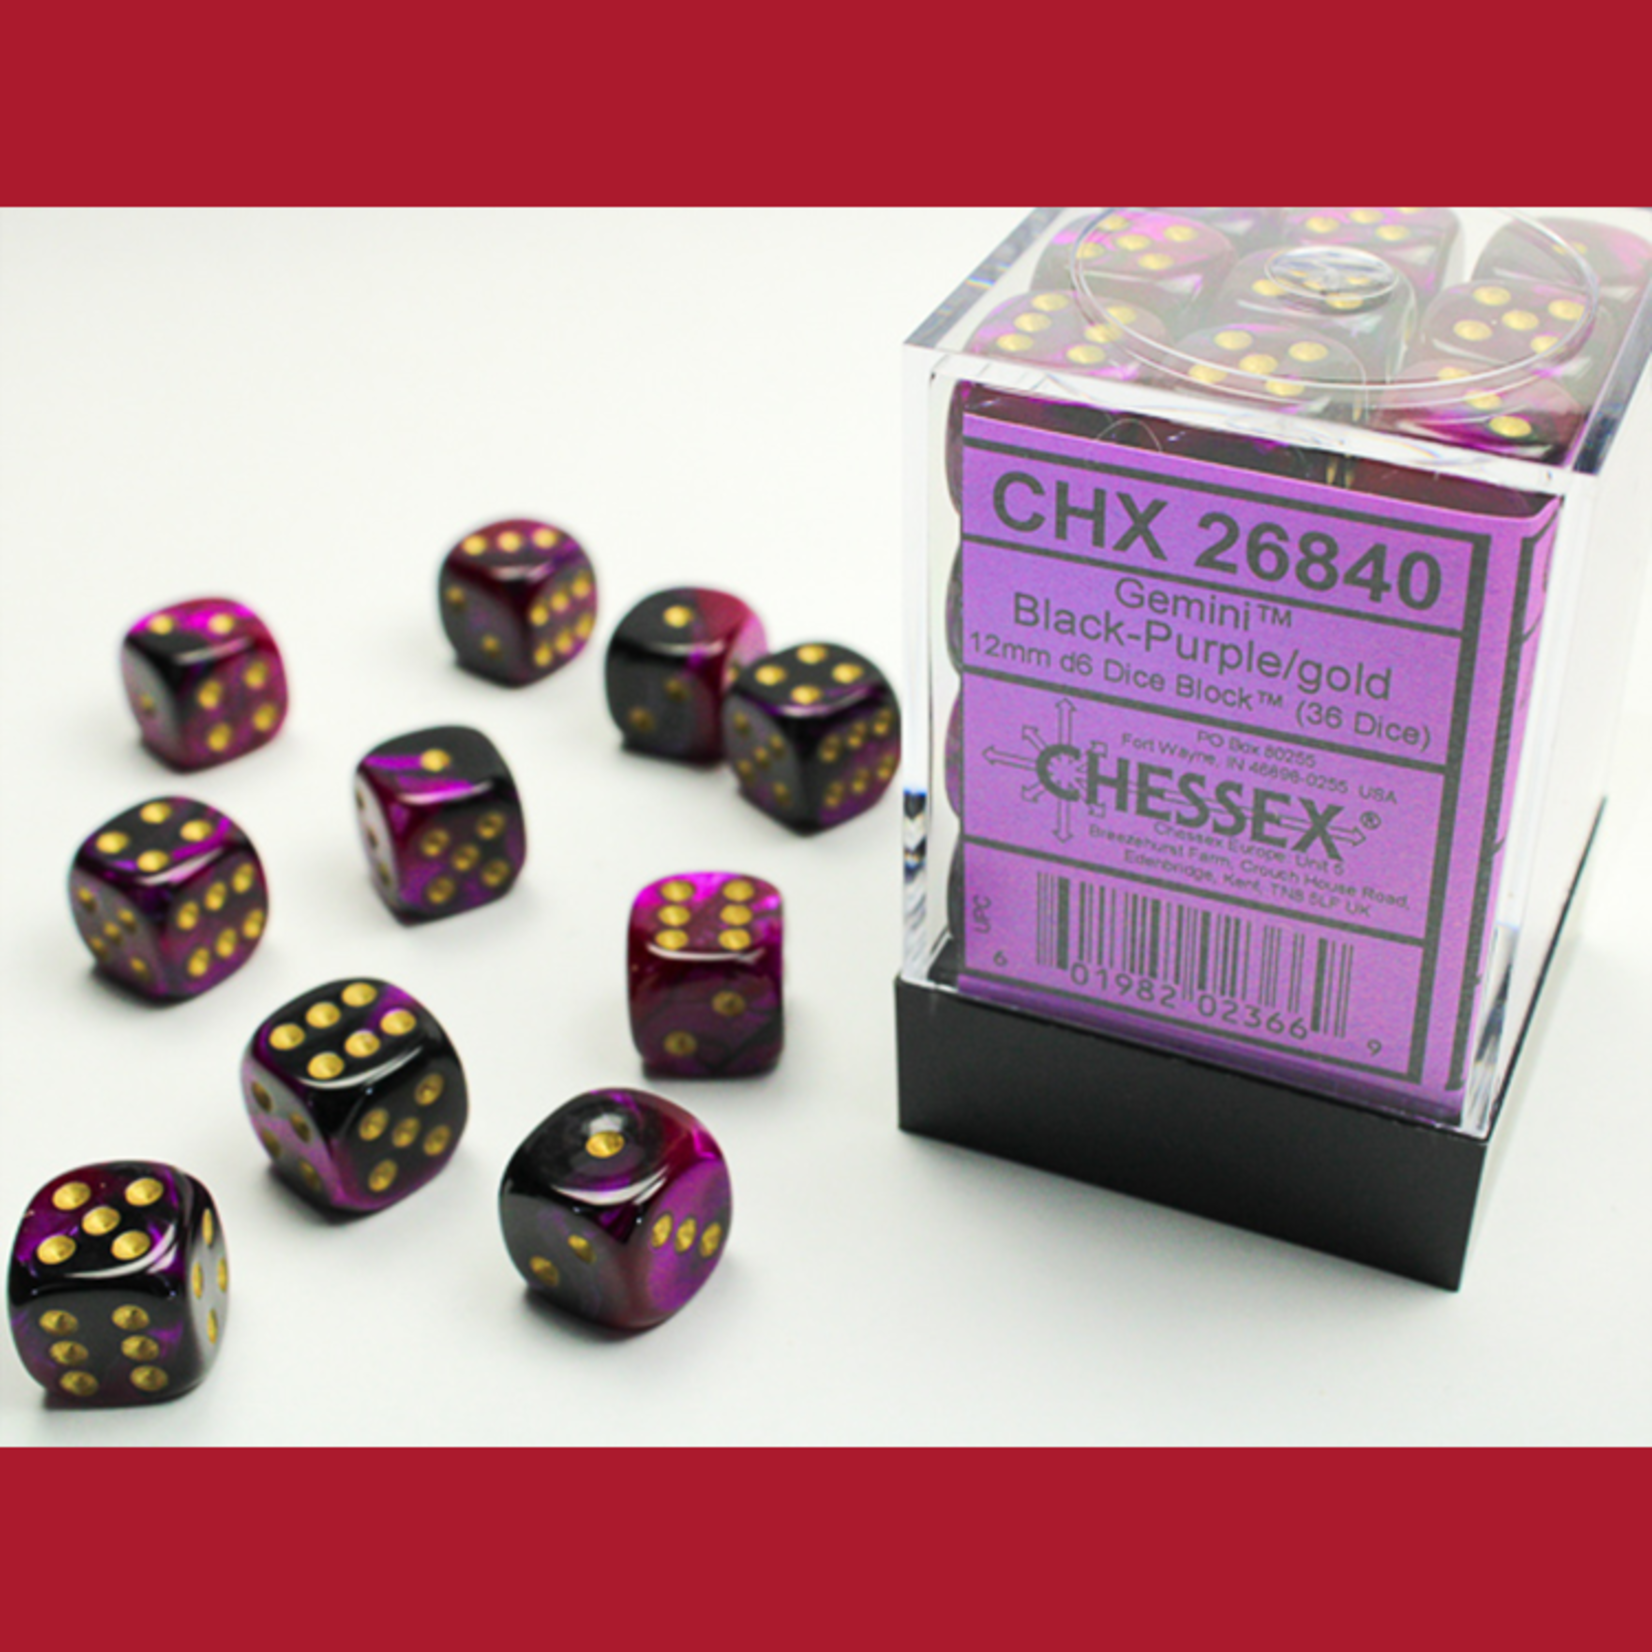 Chessex CHX 26840 Gemini Black-Purple / Gold 12mm